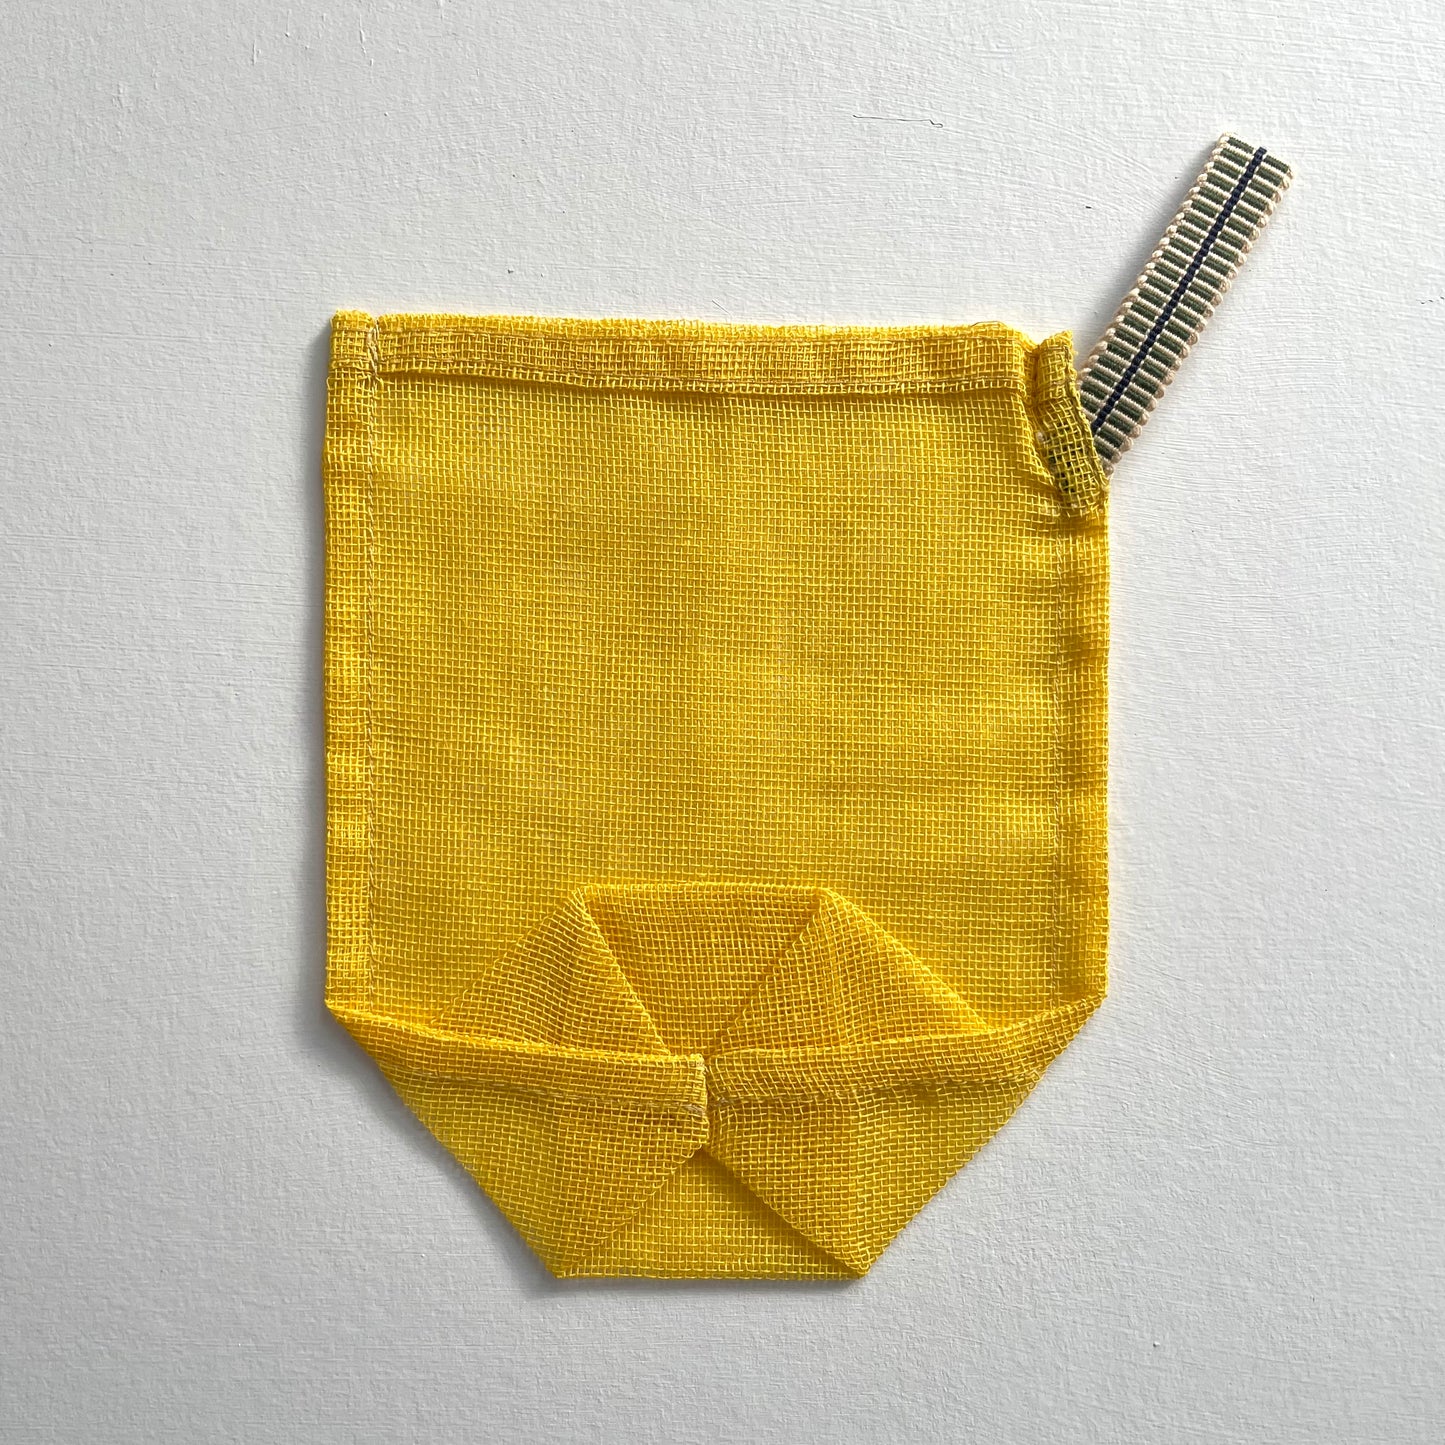 100 percent cotton mesh mosquito net yellow small eco produce bag closeup of back